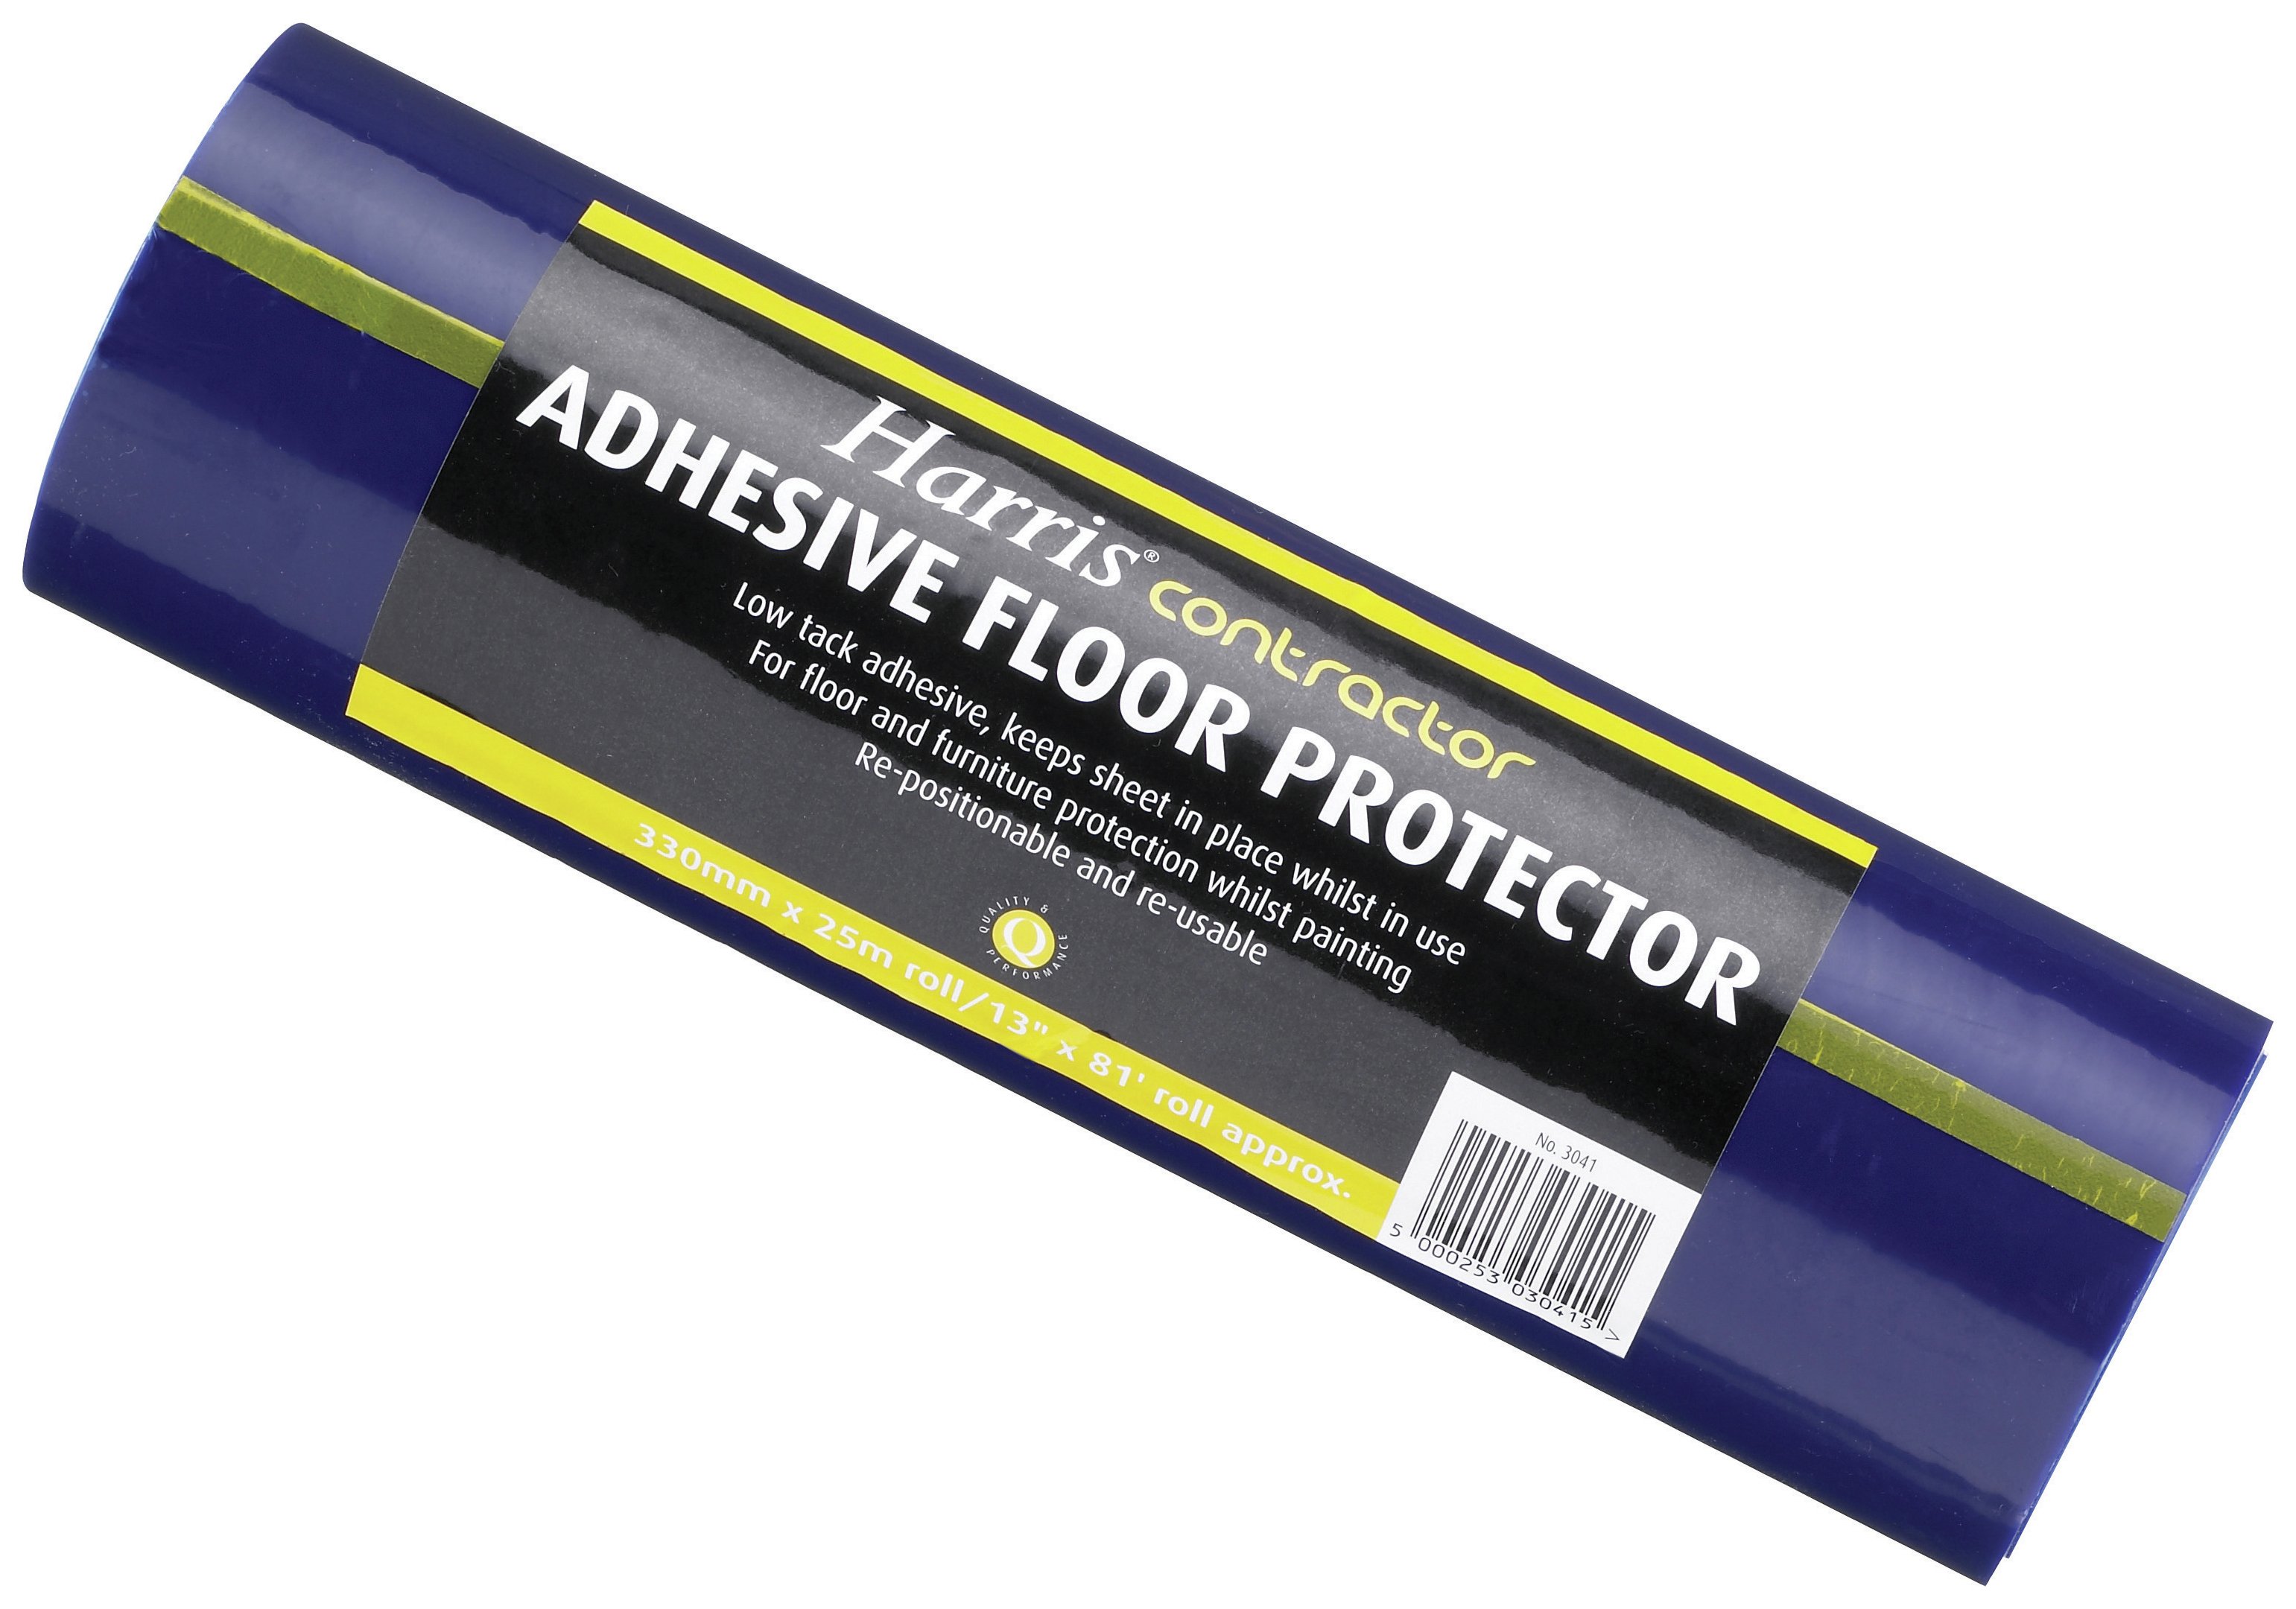 Harris - Adhesive Floor Protector Review